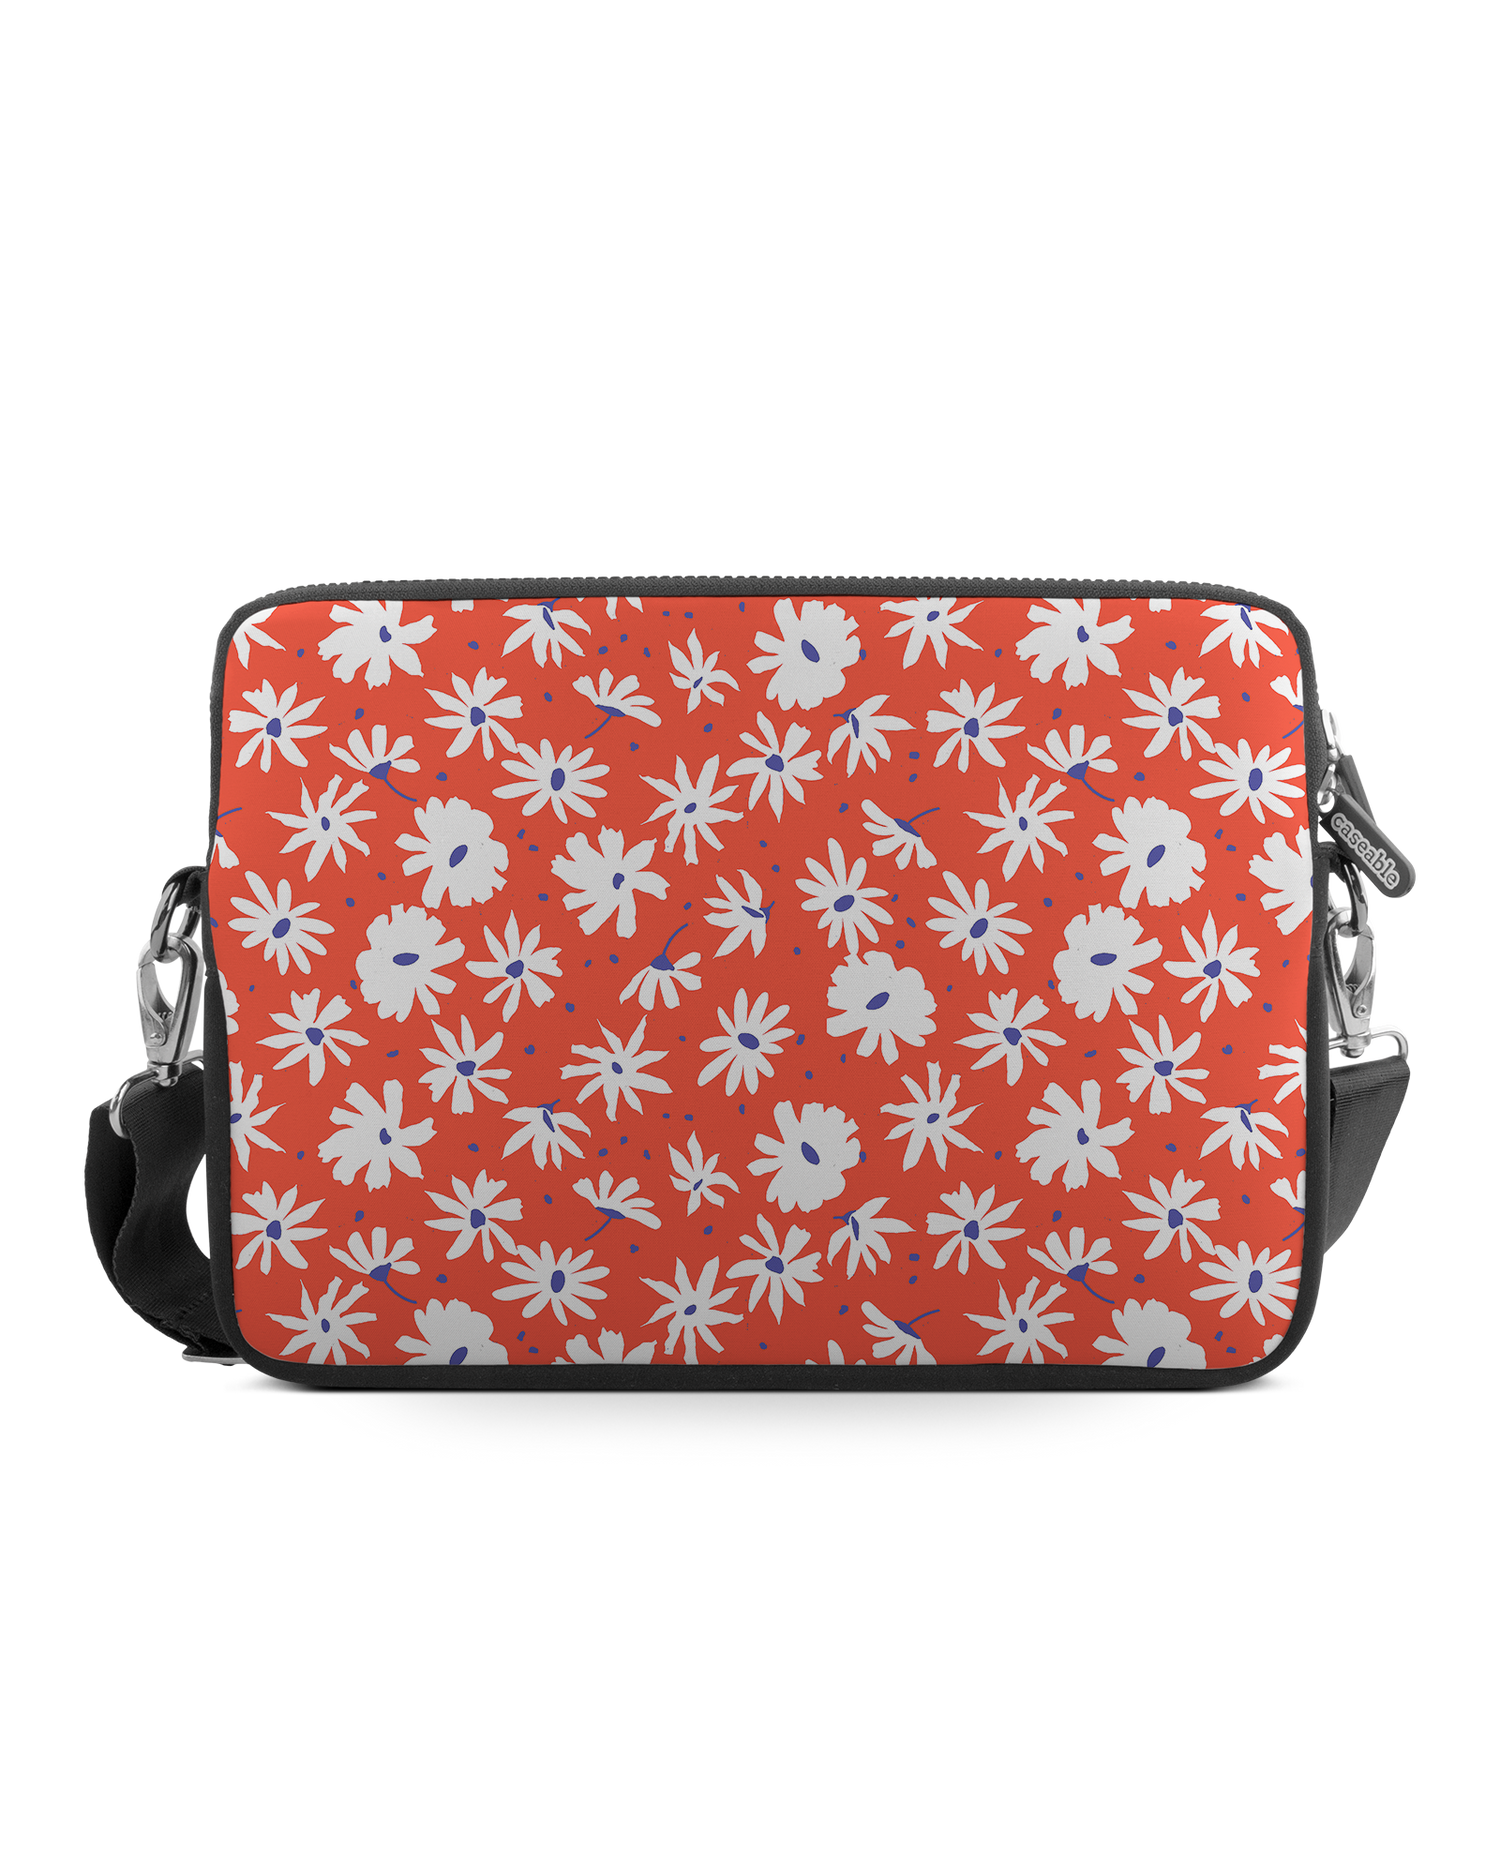 Retro Daisy Premium Laptop Bag 13 inch: Front View